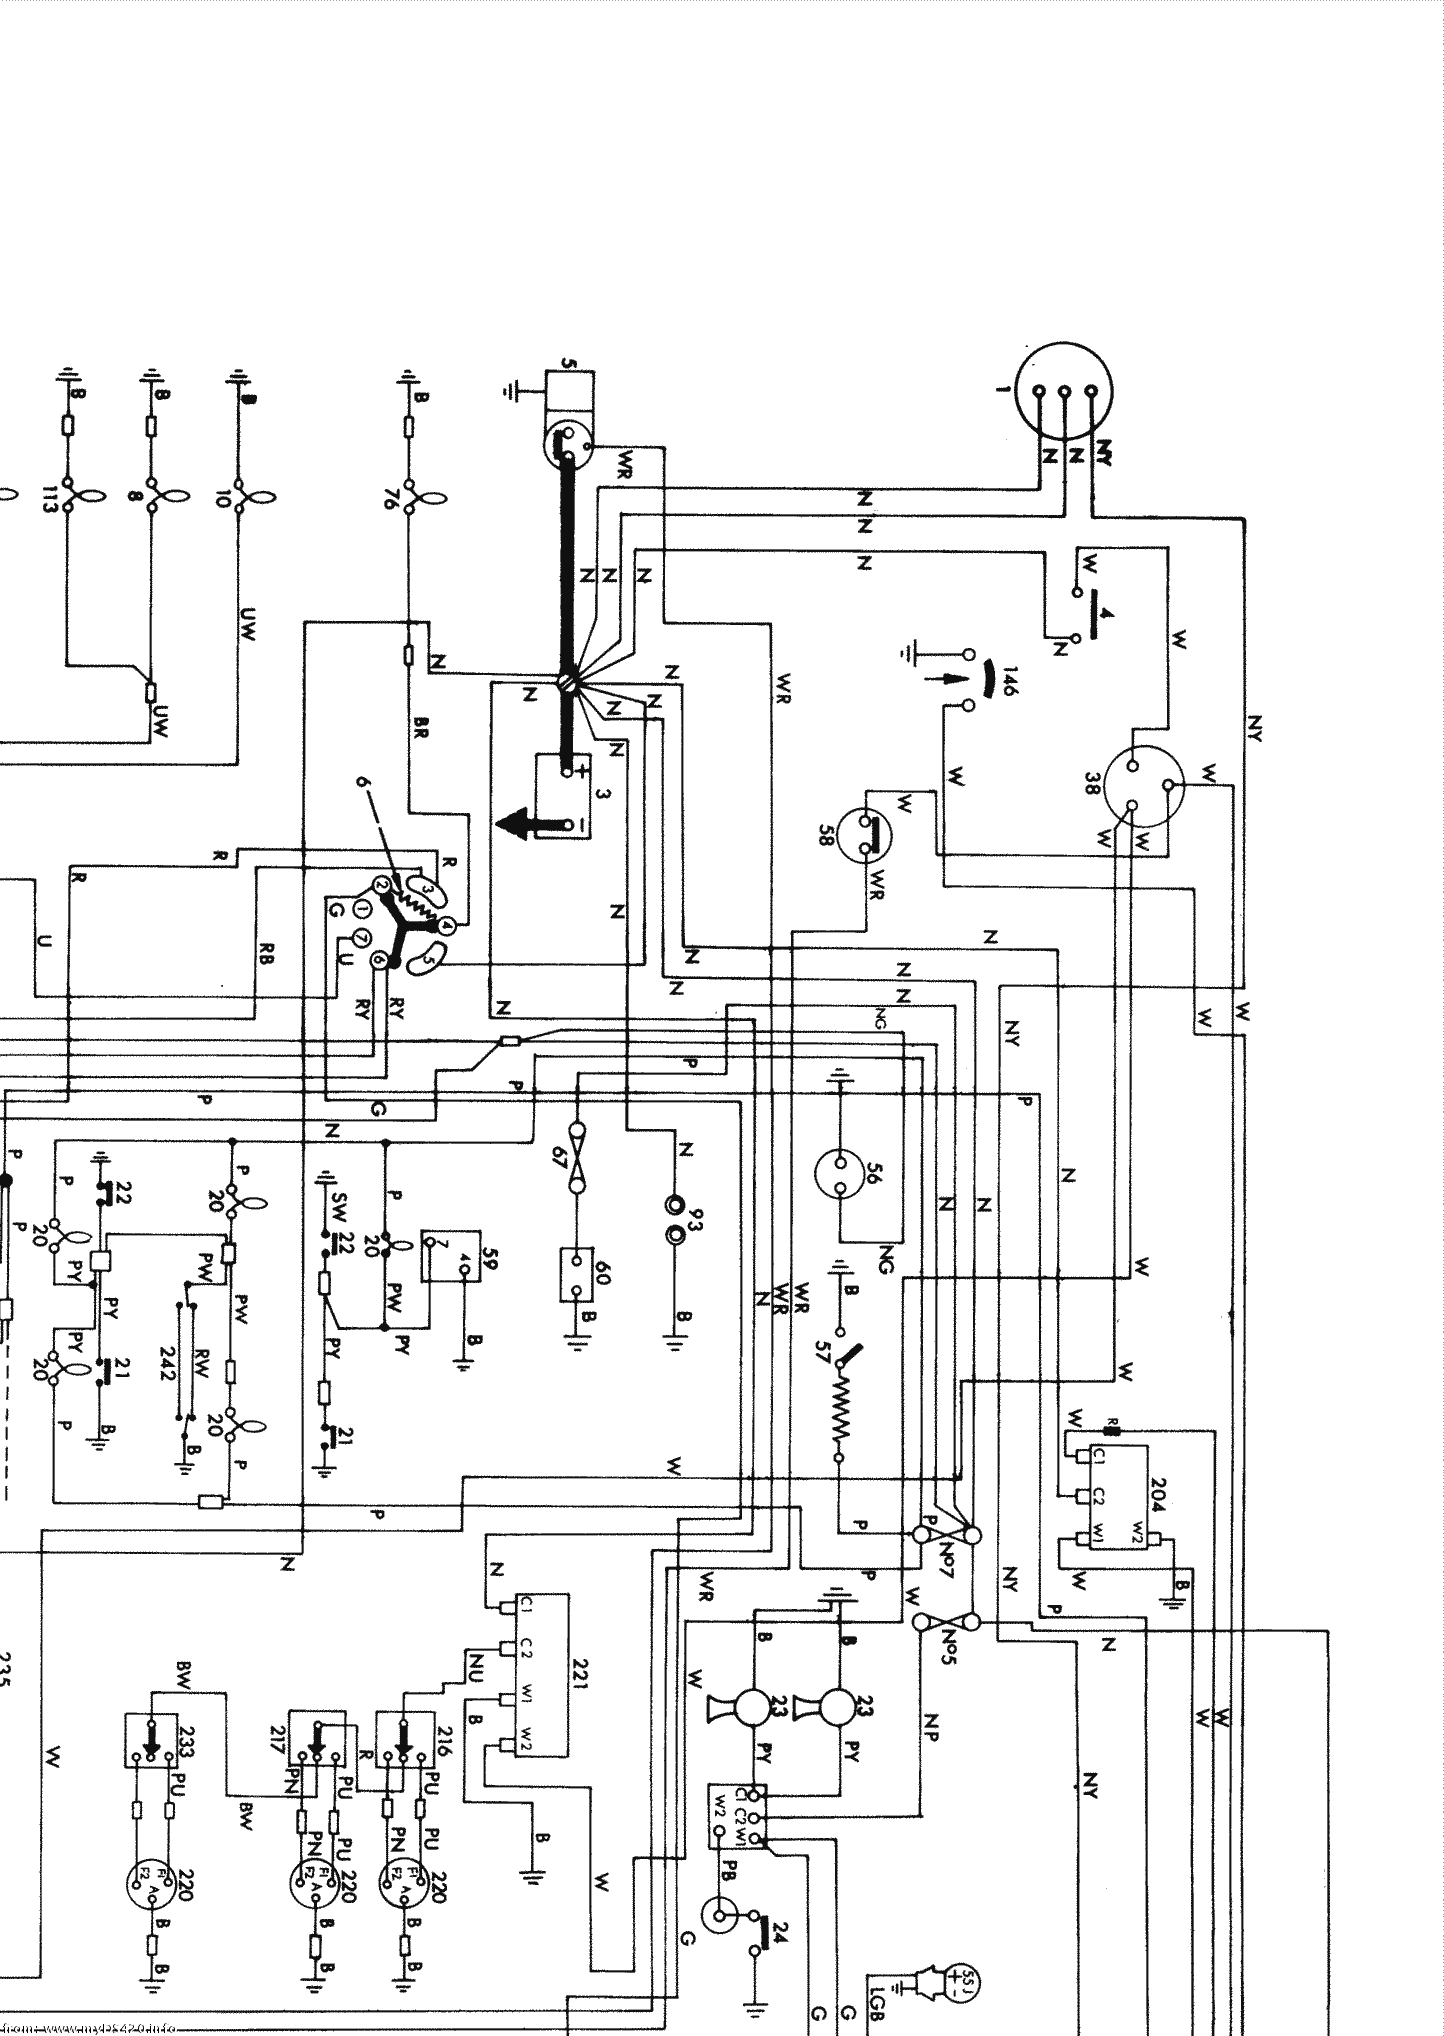 wiring diagram medium res. A4 NW (1970)